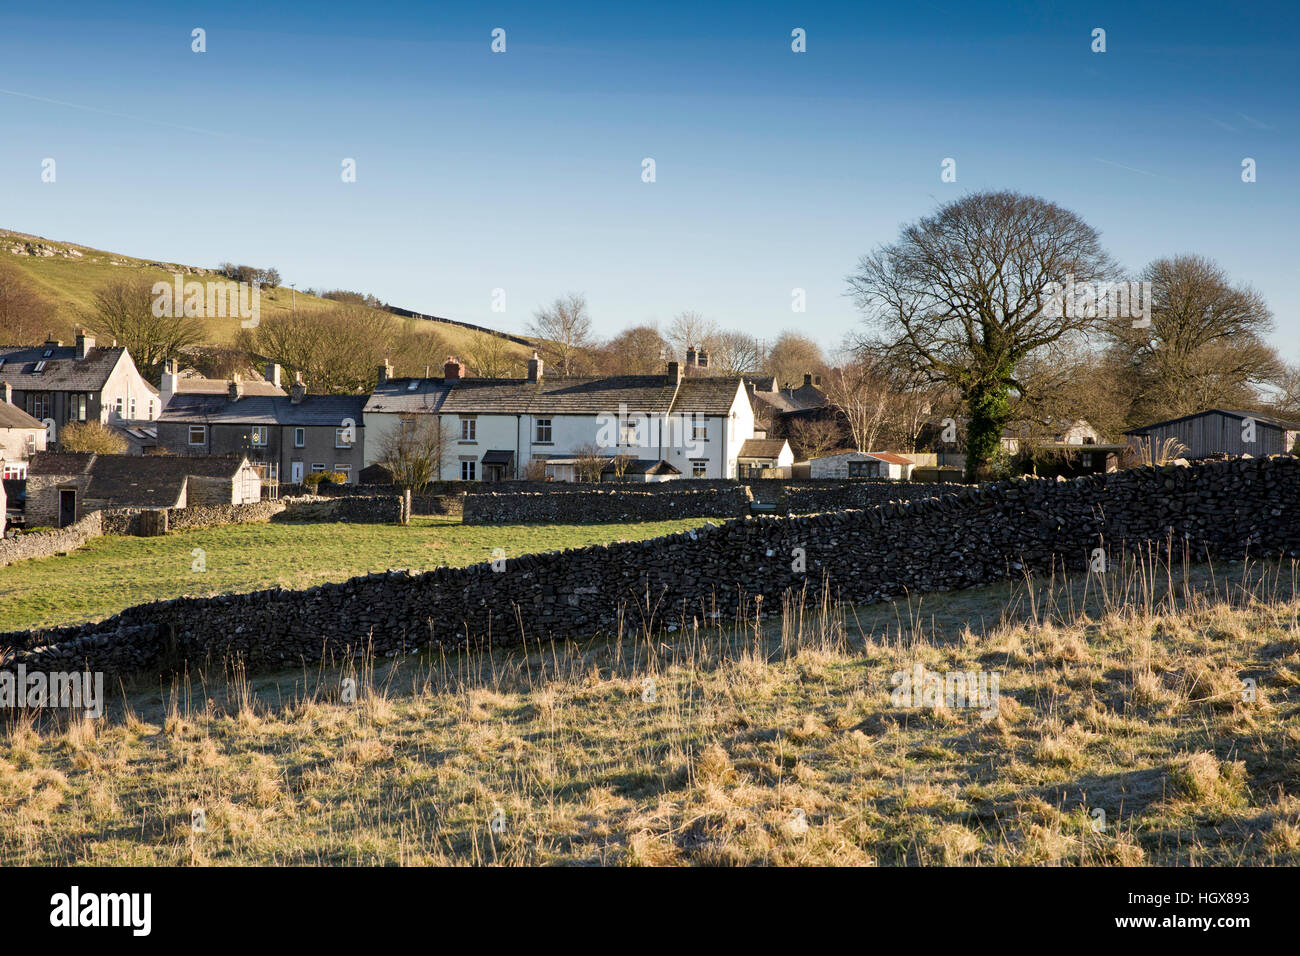 UK, England, Derbyshire, Litton, village houses across farmland Stock Photo